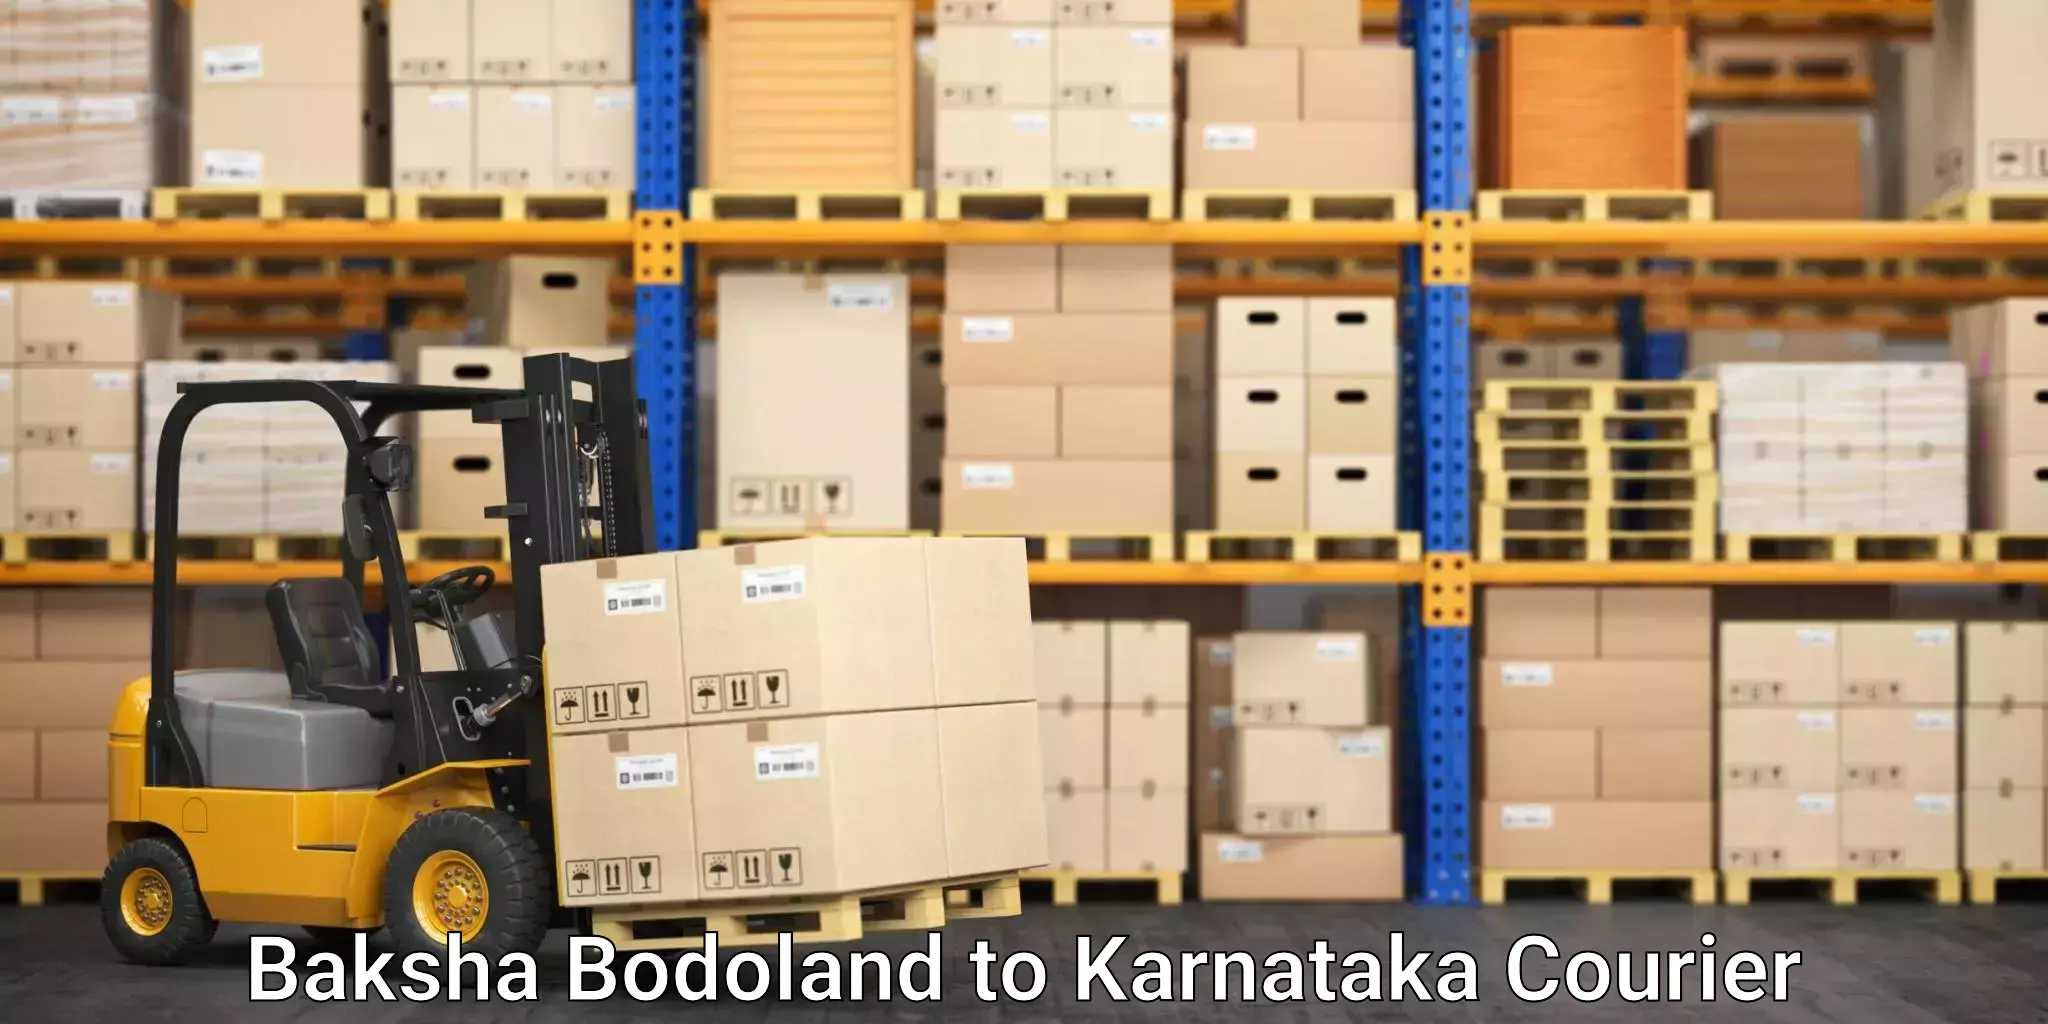 Global logistics network Baksha Bodoland to Karnataka